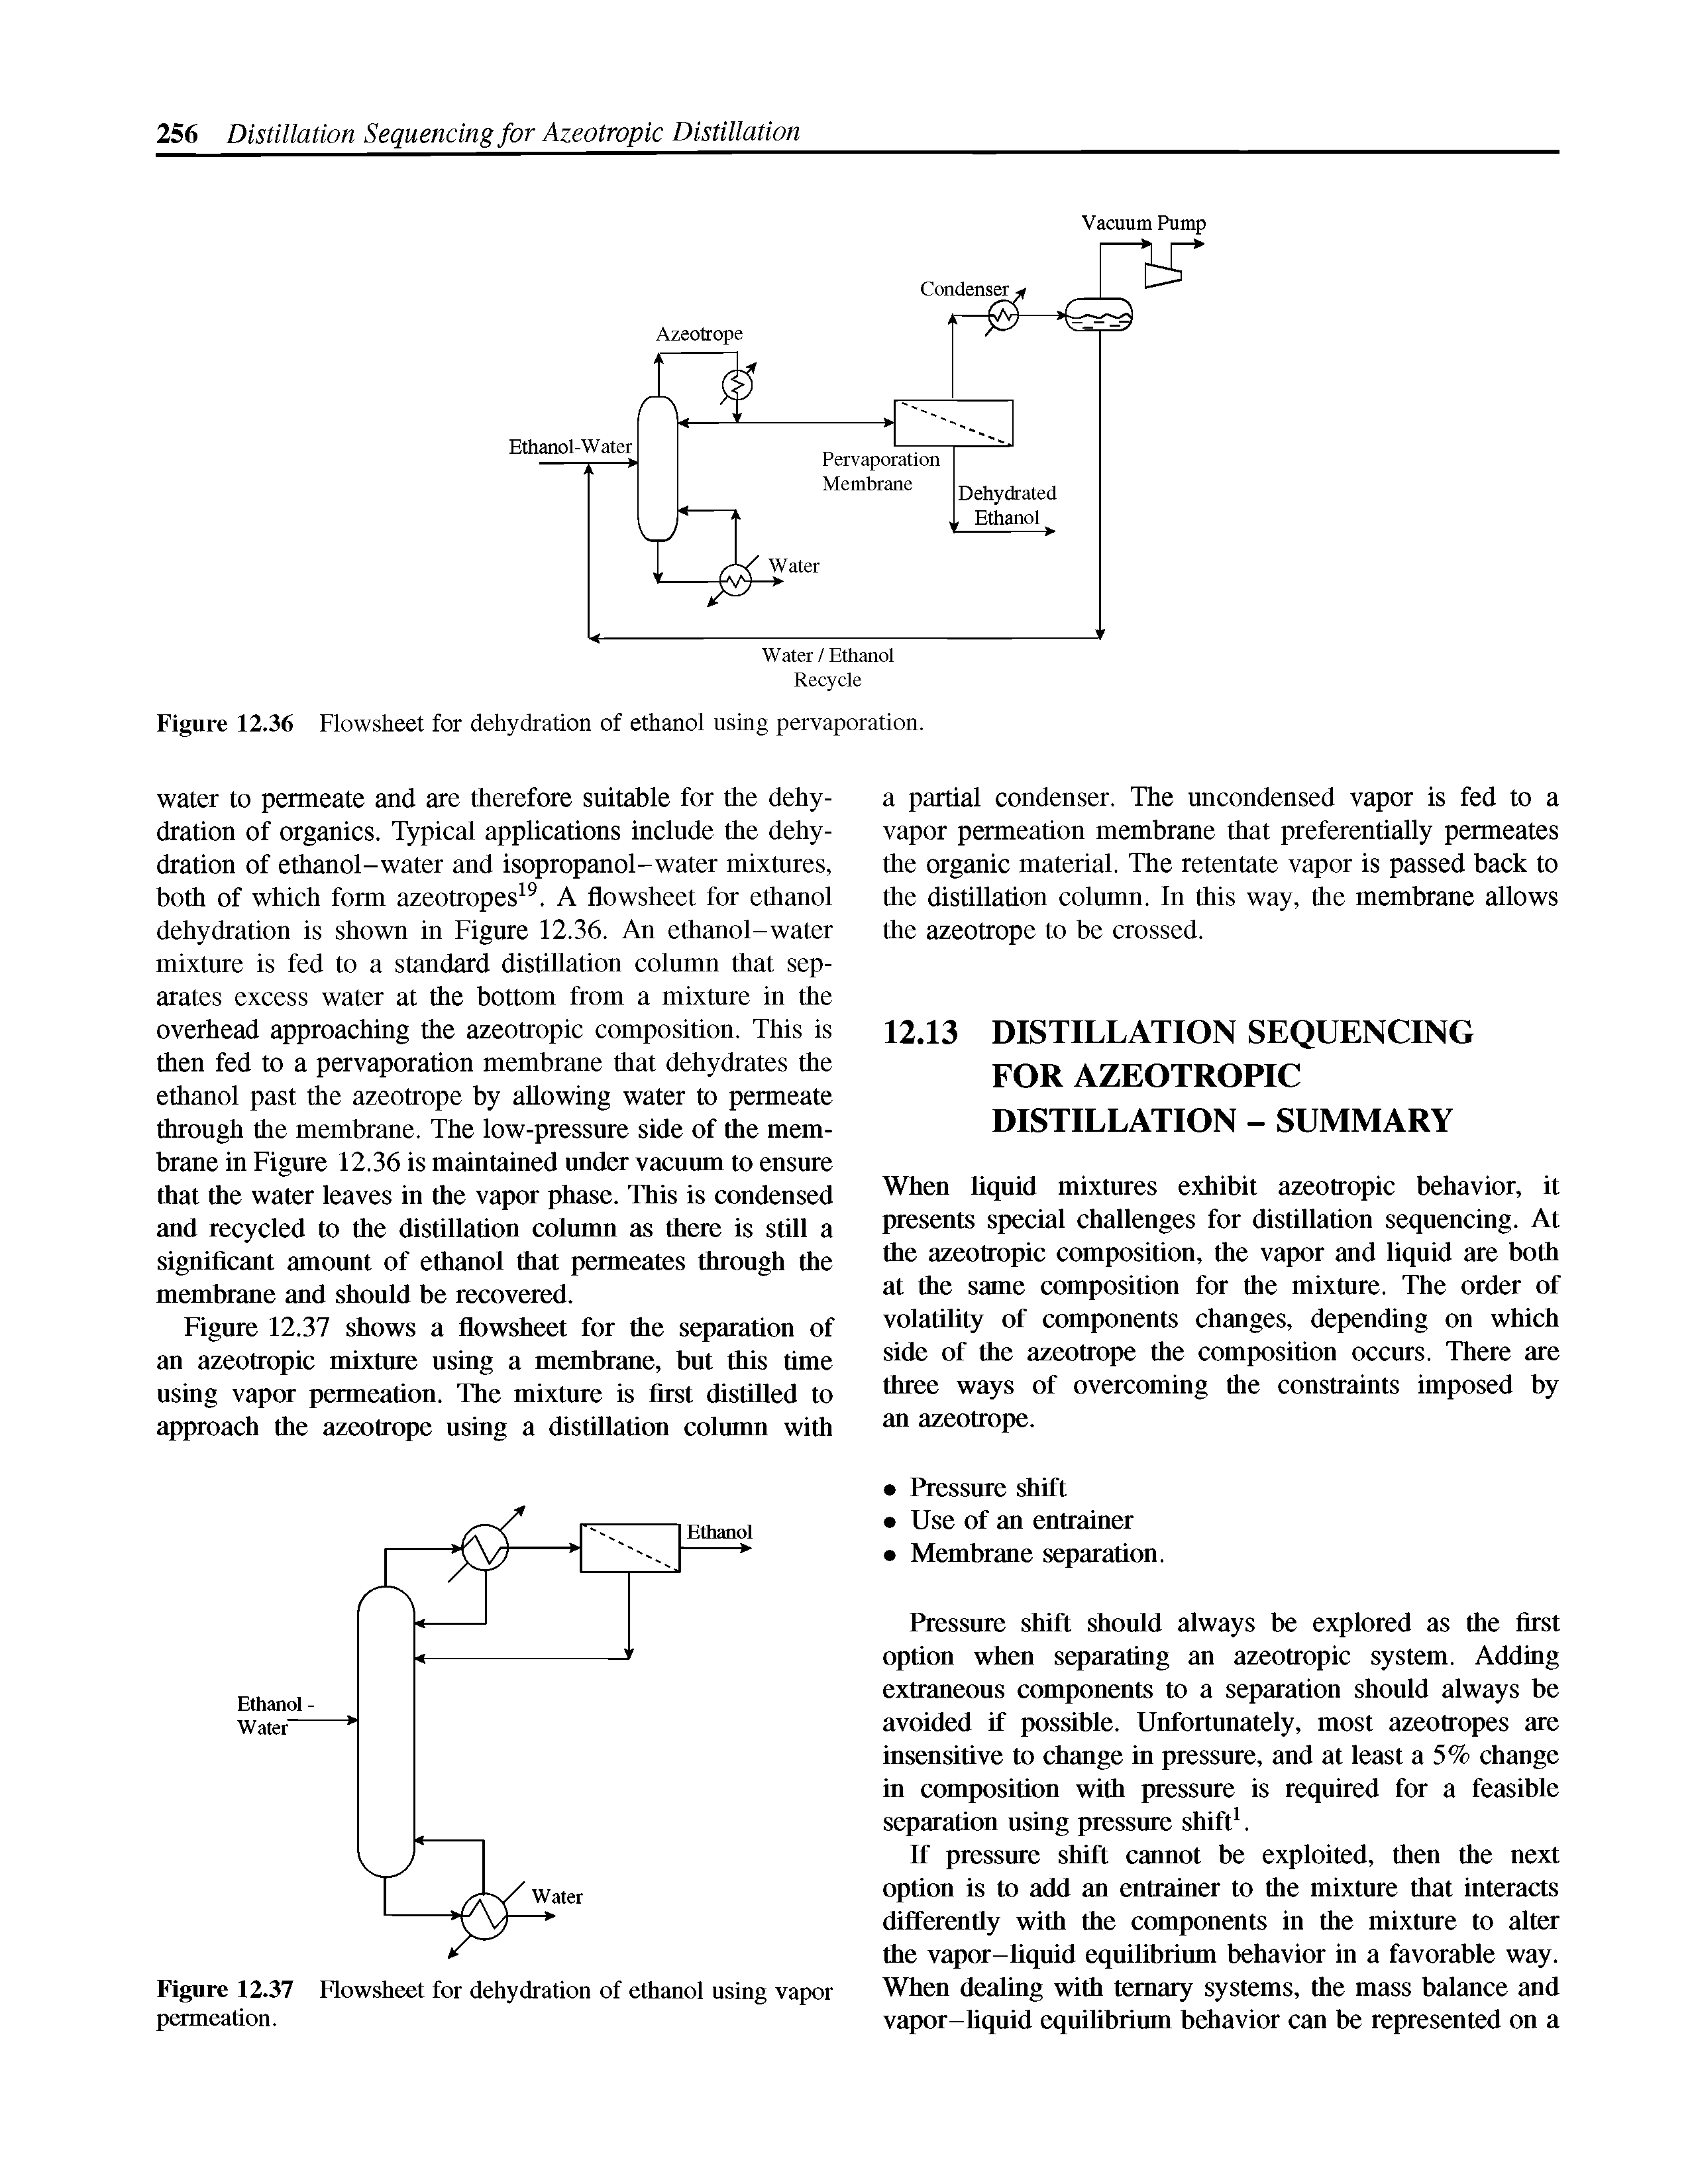 Figure 12.37 Flowsheet for dehydration of ethanol using vapor permeation.